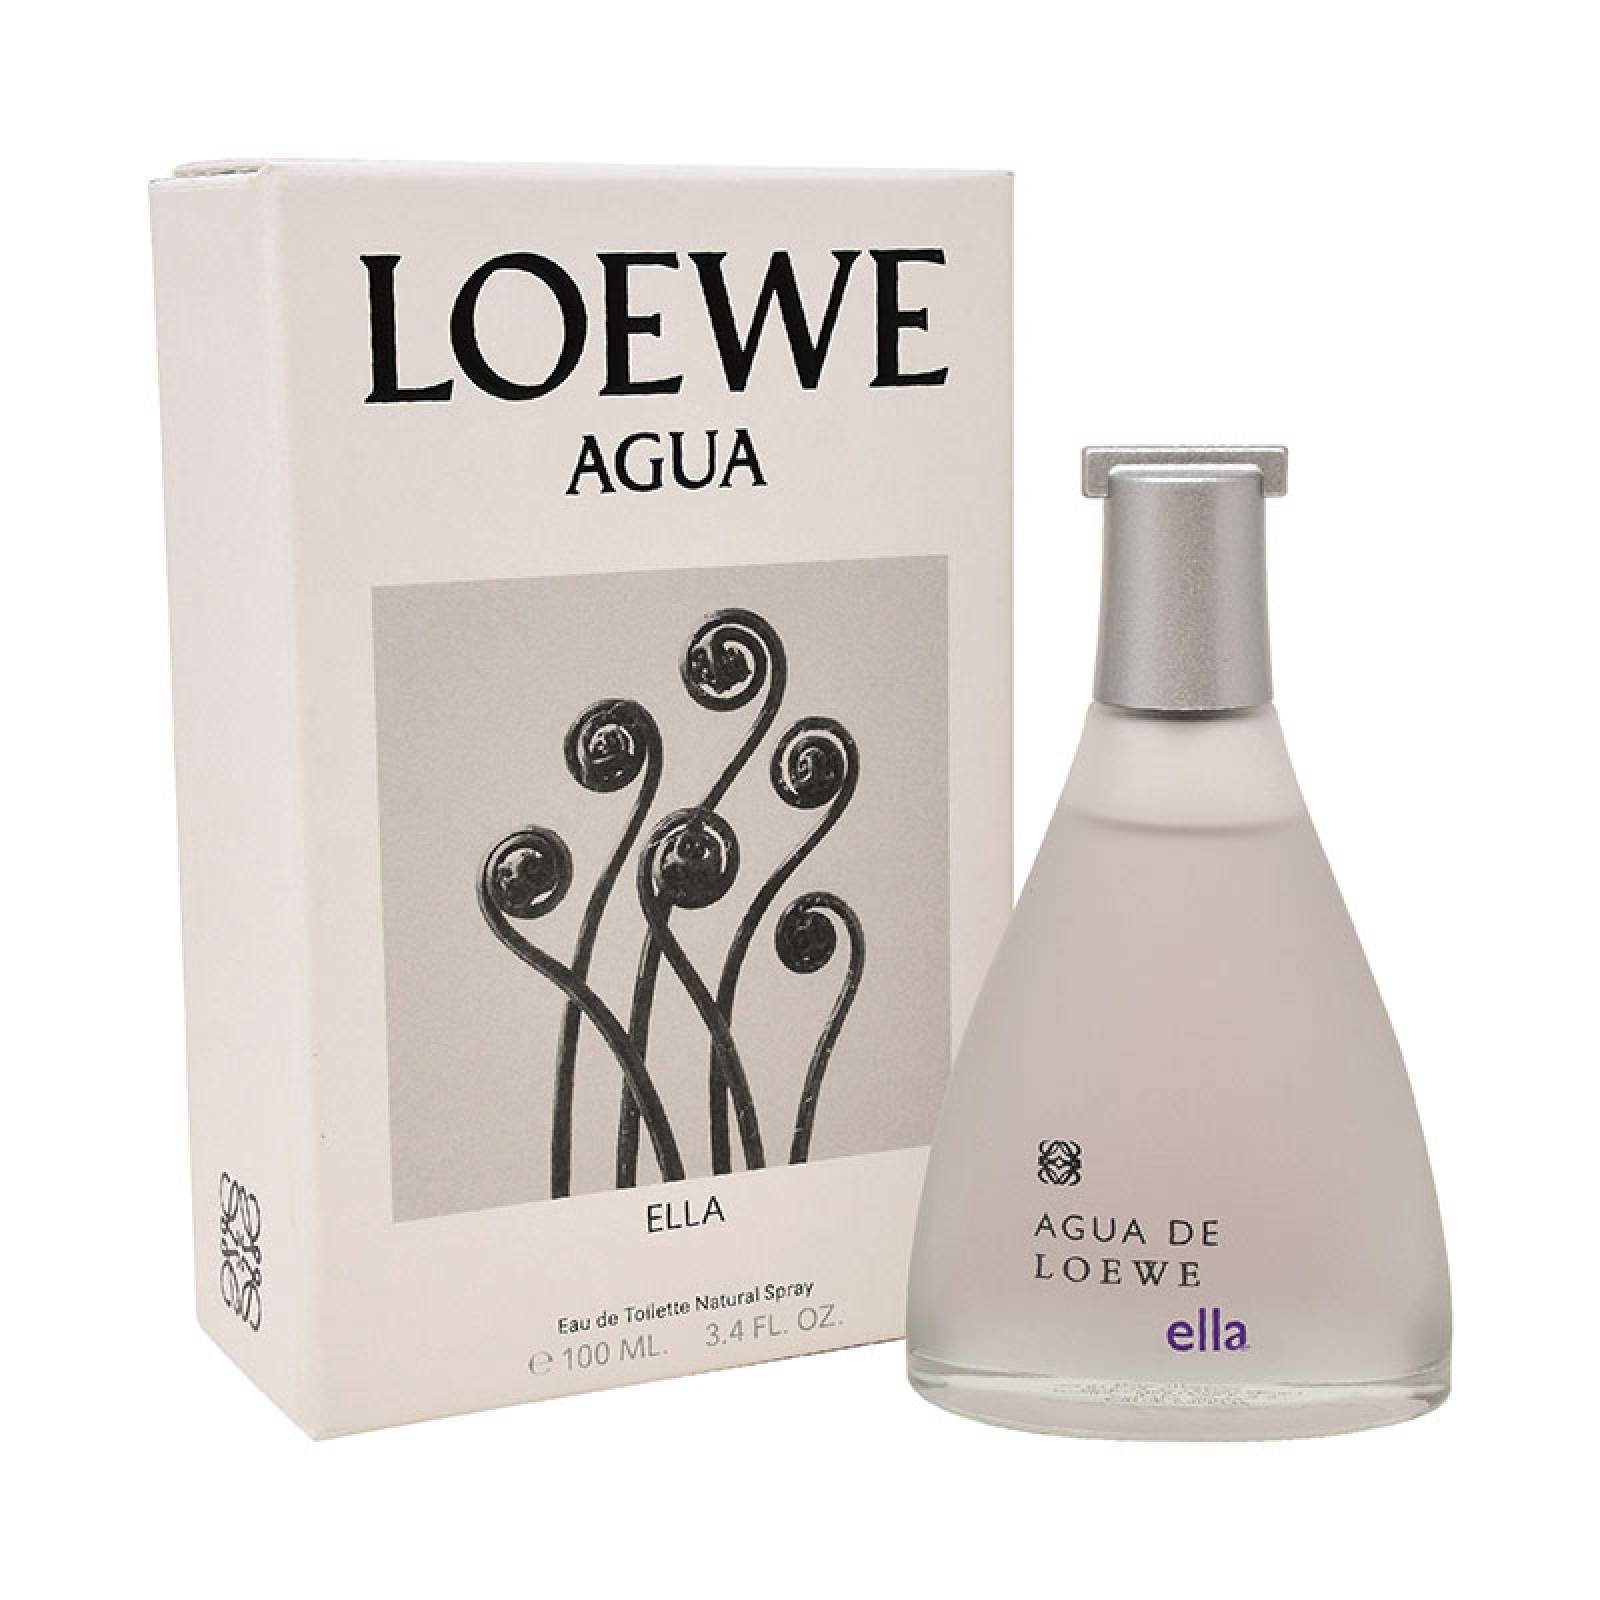 Agua De Loewe Ella 100 ml Edt Spray de Loewe